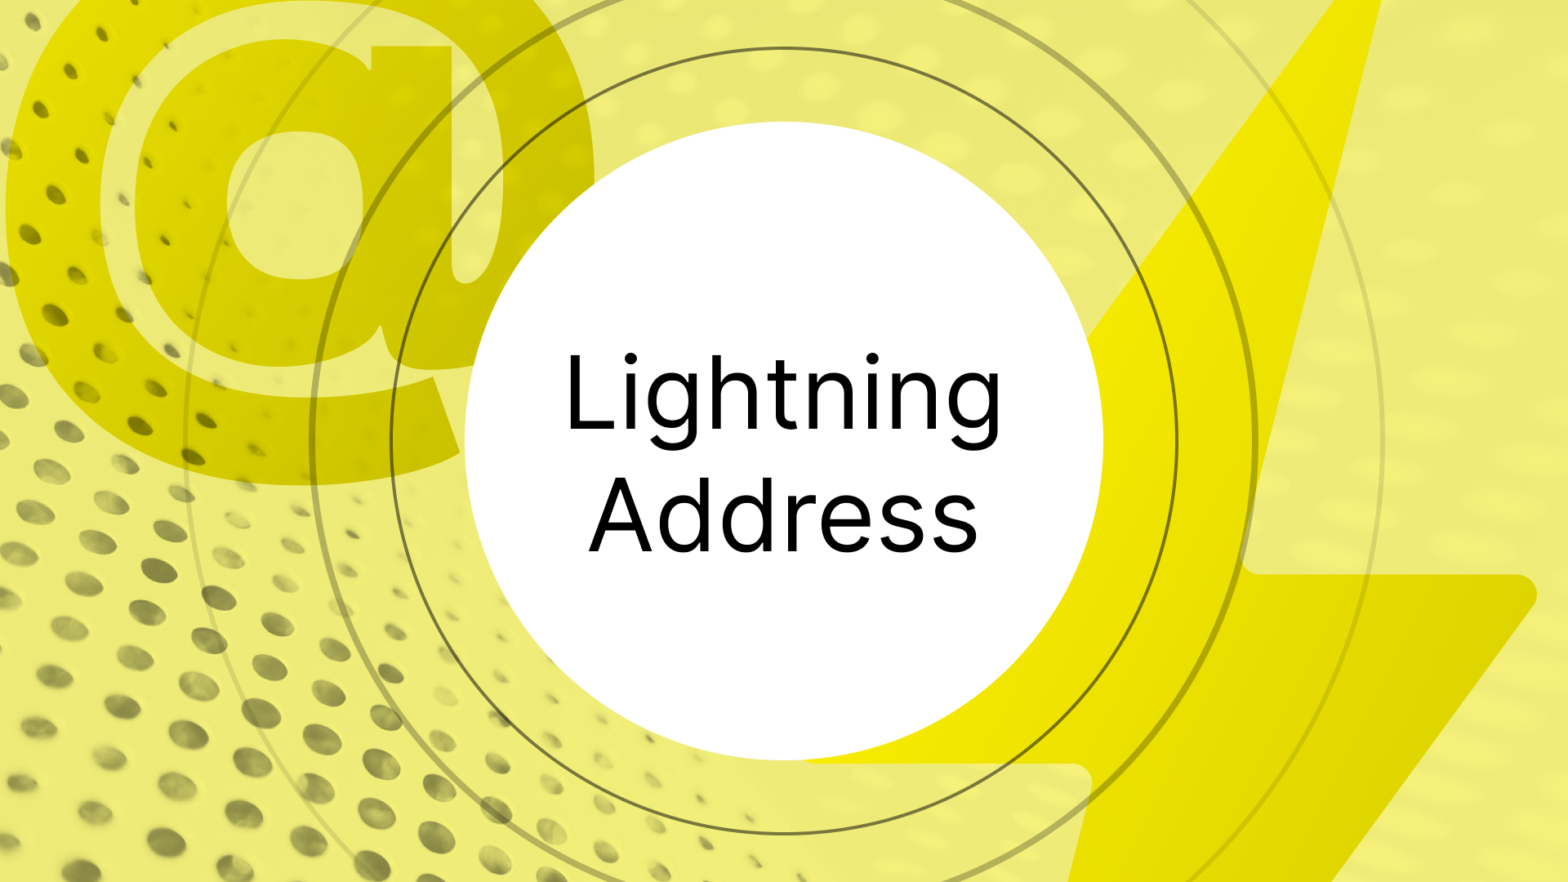 About Bitcoin Lightning Address